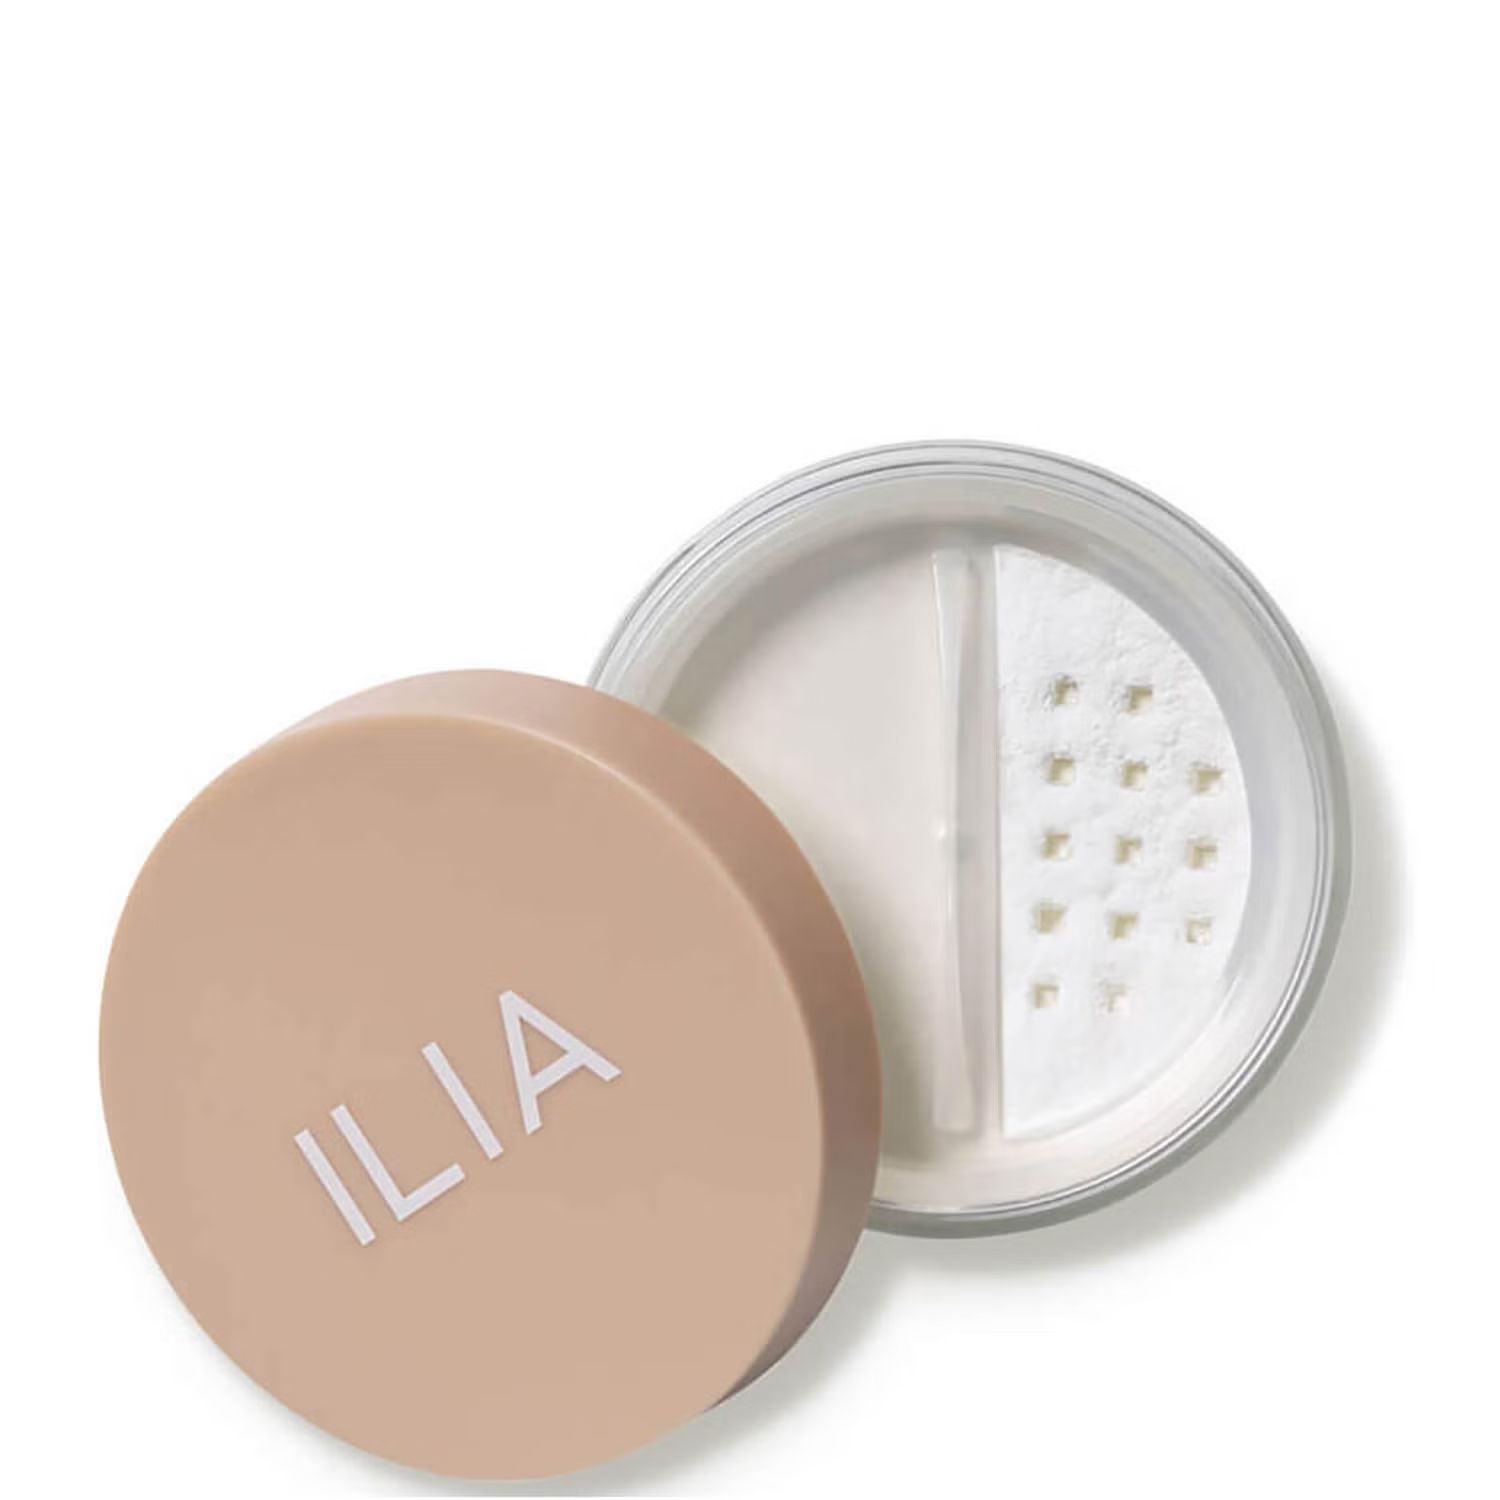 ILIA Soft Focus Finishing Powder - Fade Into You (0.32 oz.) | Dermstore (US)